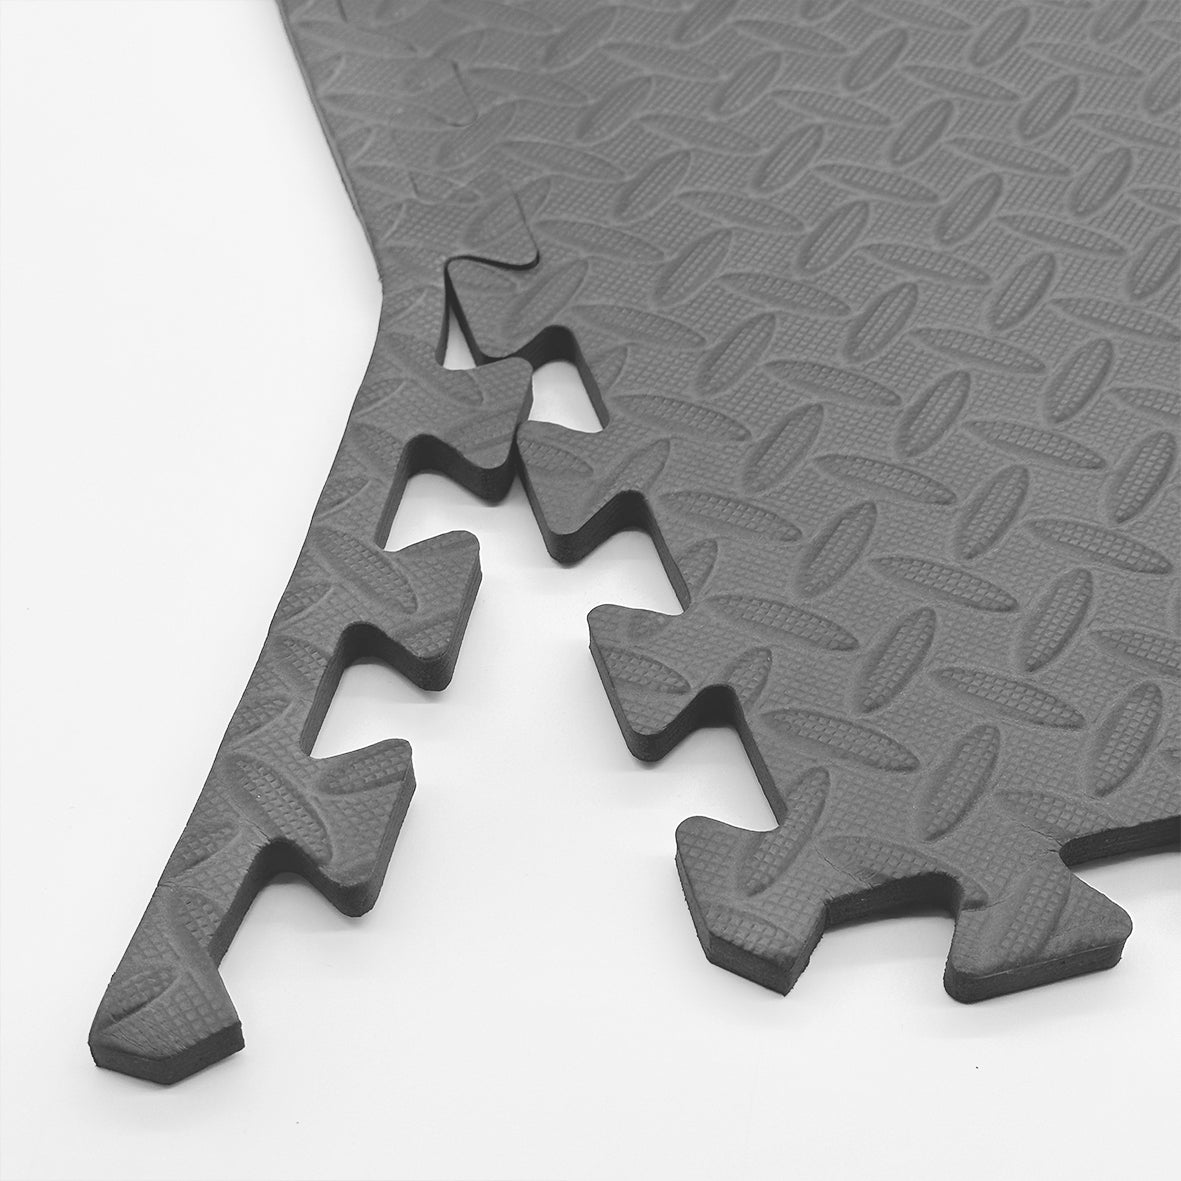 Nicoman's Interlocking EVA Foam Garage Gym Floor Tiles